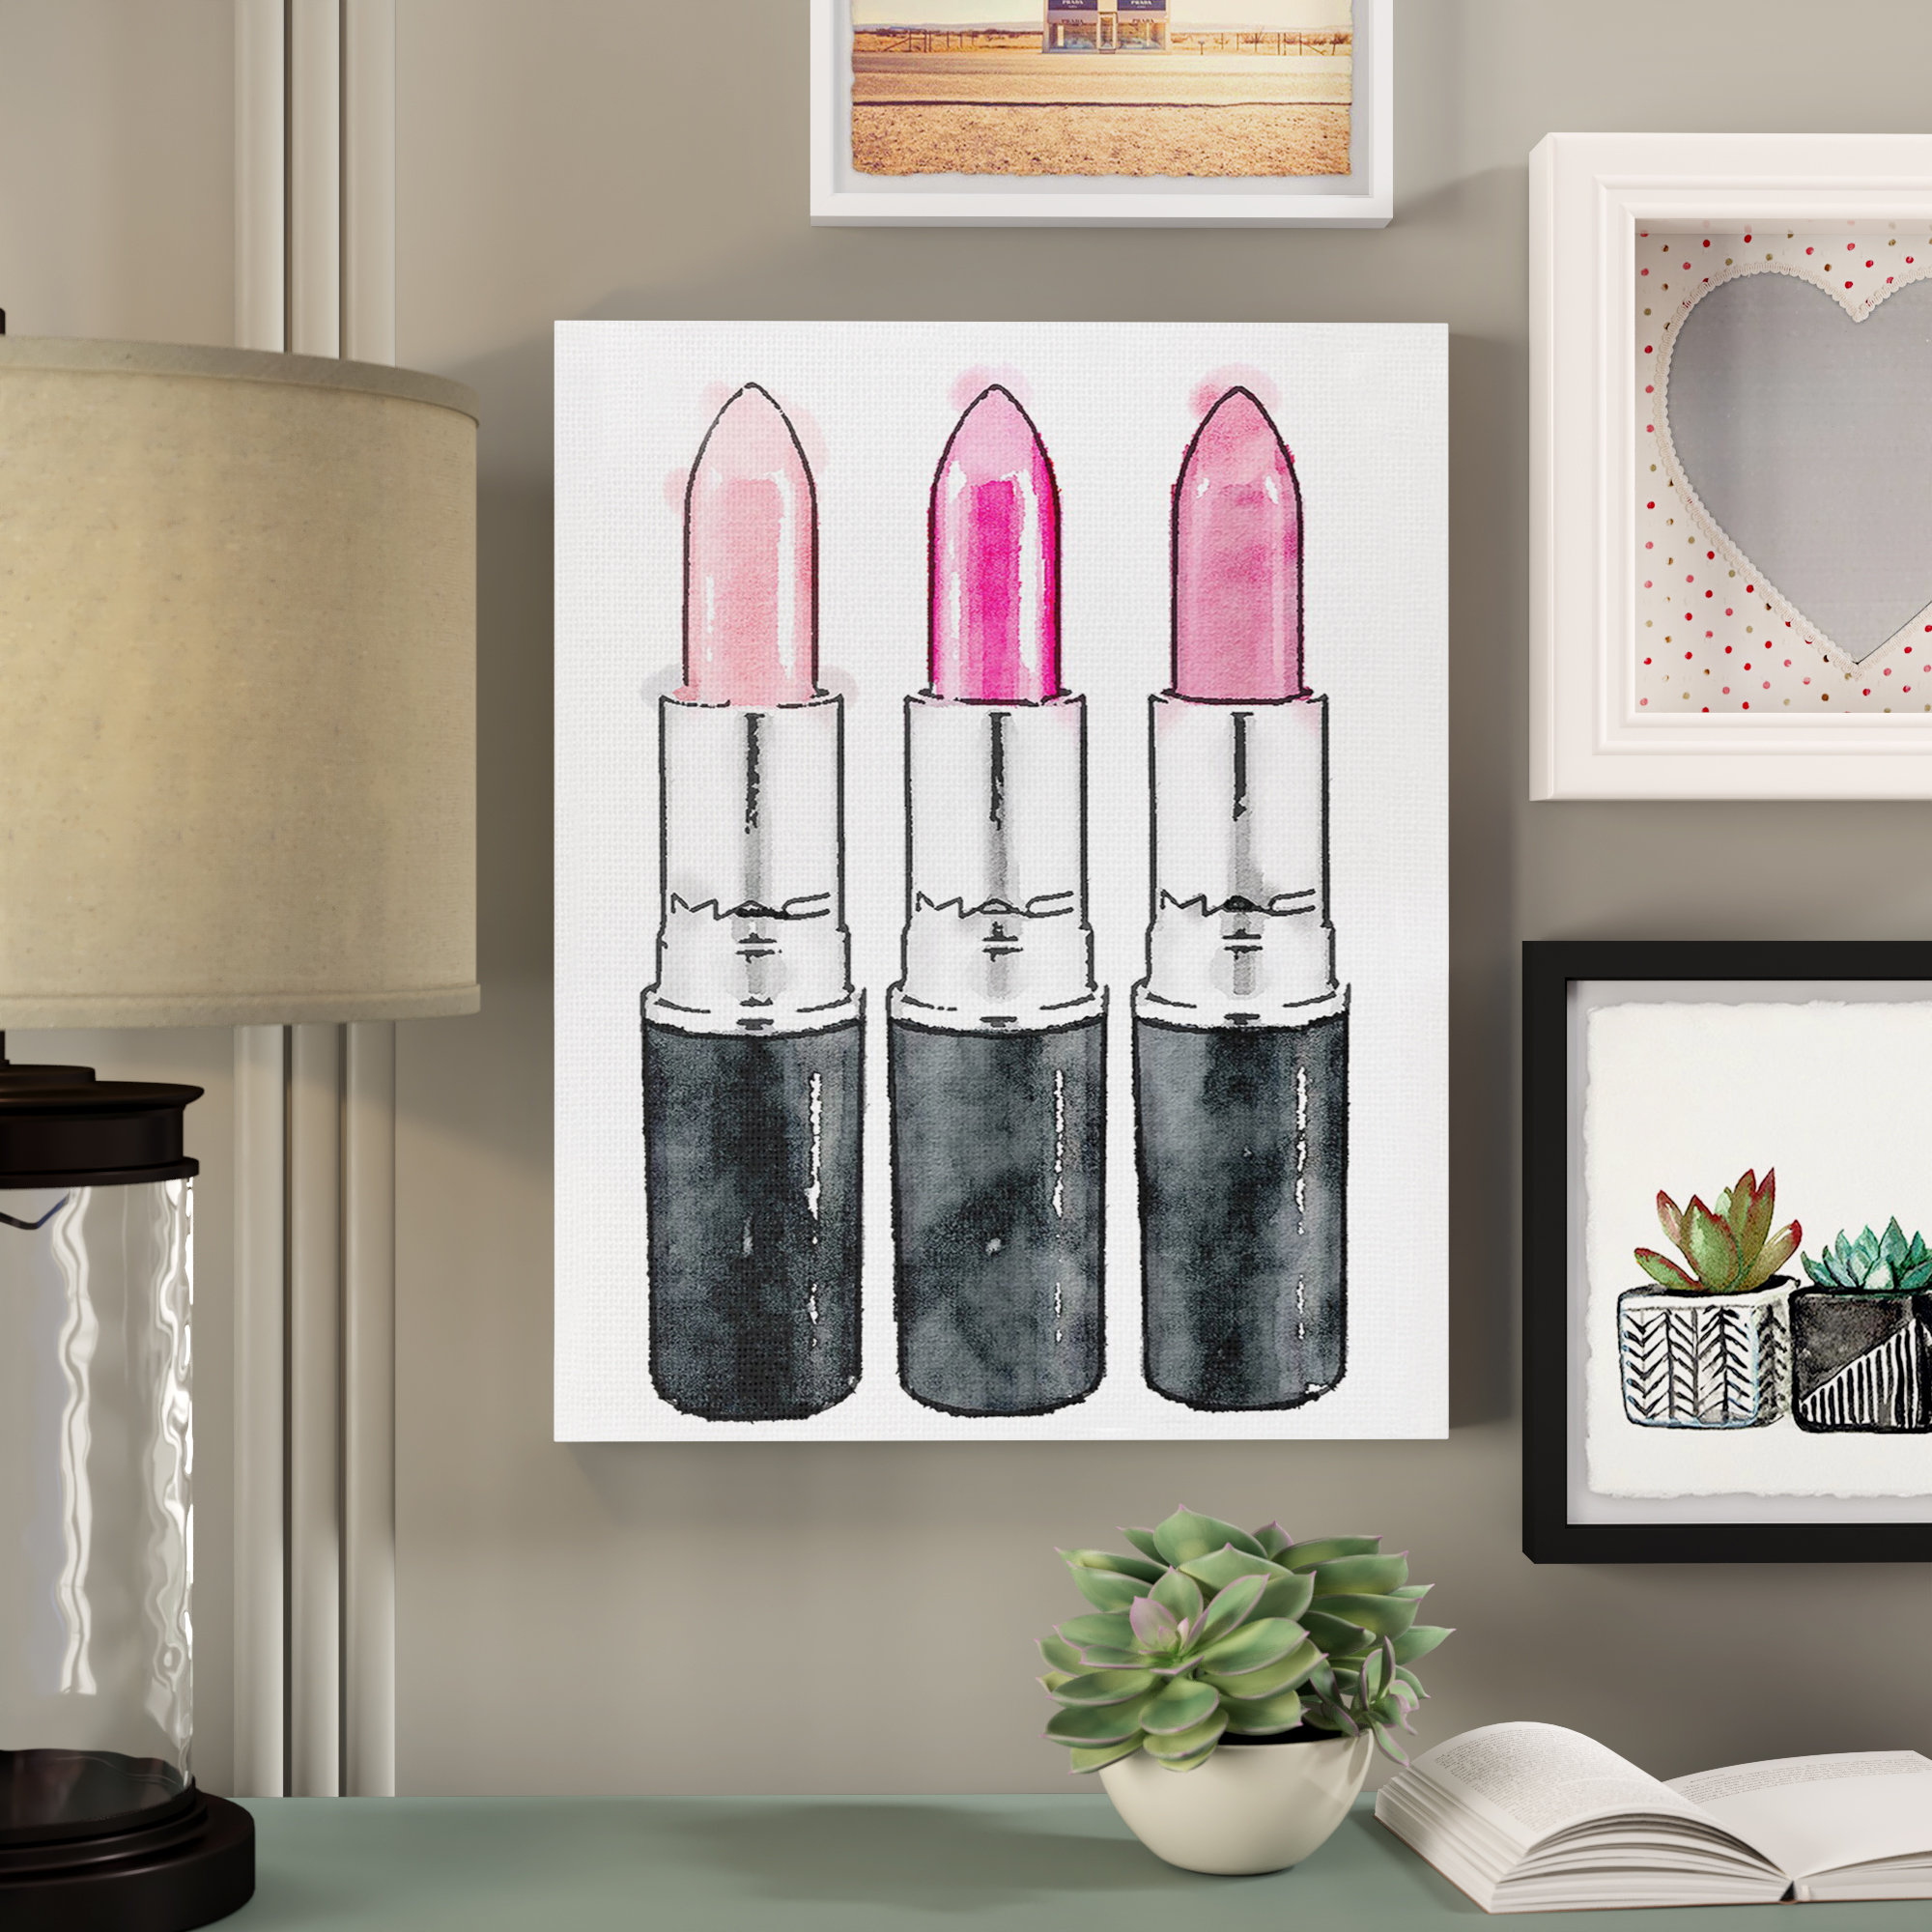 Stupell Industries Fashion Designer Makeup Perfume Lipstick Pink Watercolor Framed Wall Art by Amanda Greenwood, Size: 11 x 14